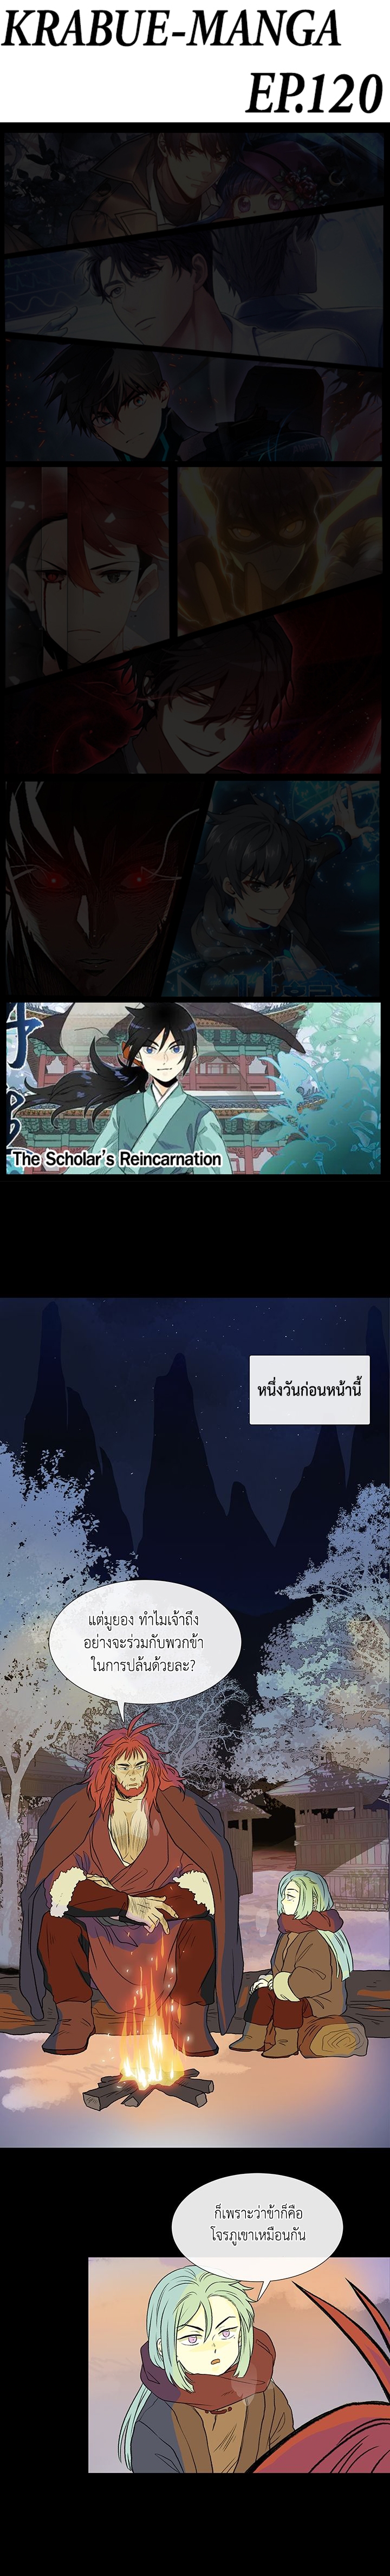 The Scholar’s Reincarnation120 01